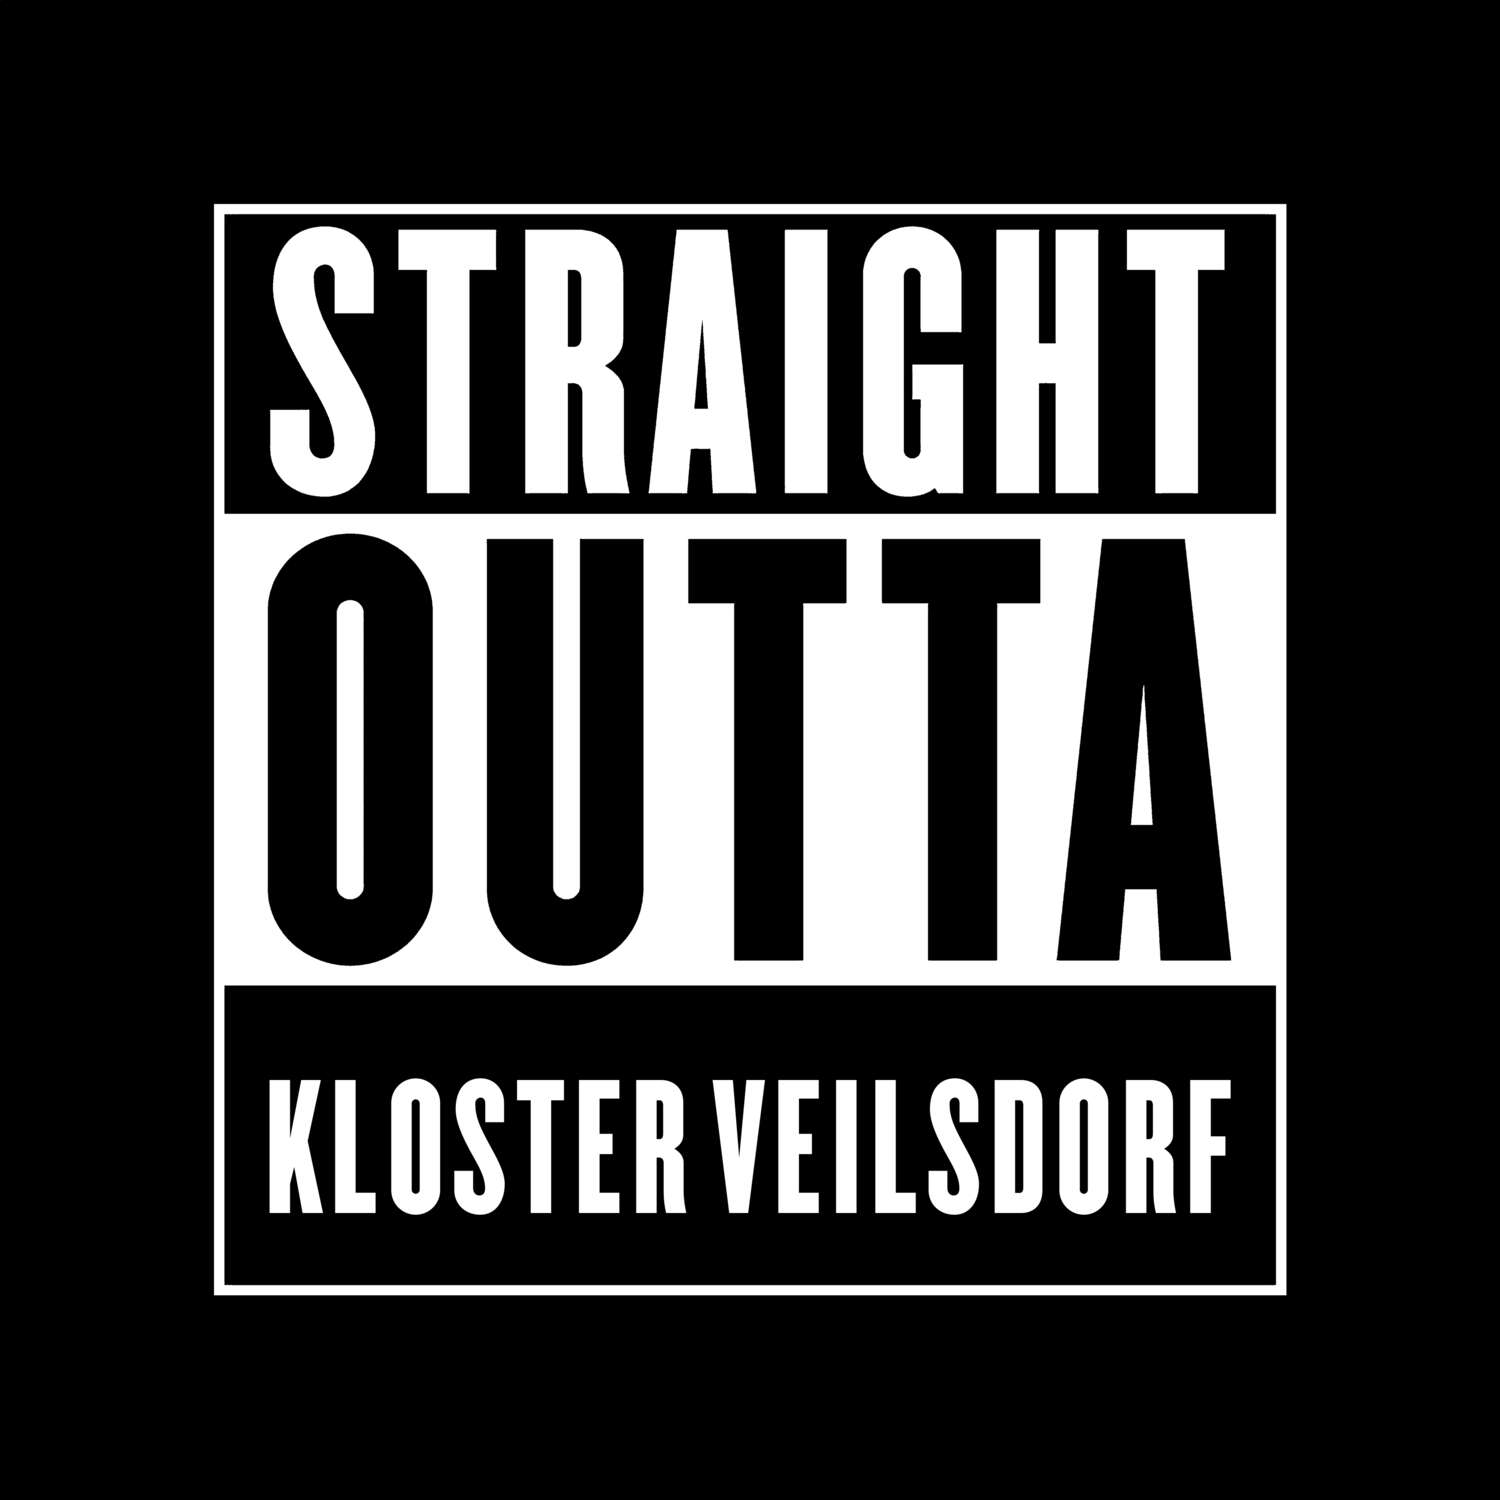 Kloster Veilsdorf T-Shirt »Straight Outta«